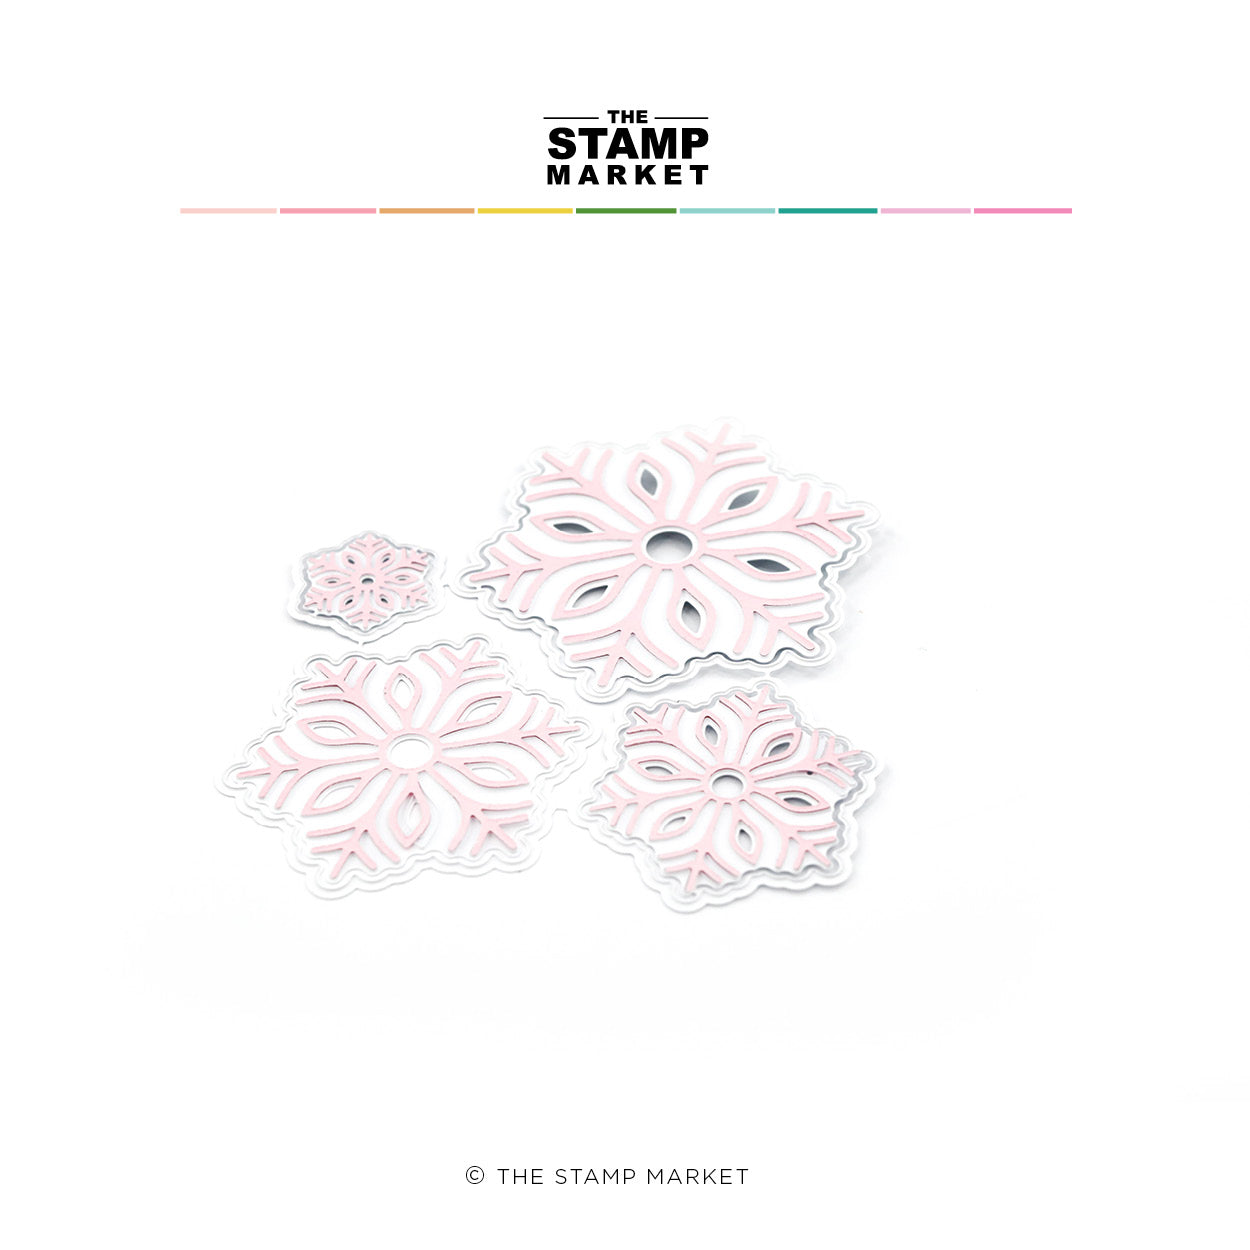 SEASON'S SNOWFLAKE STAMP – The Stamp Market